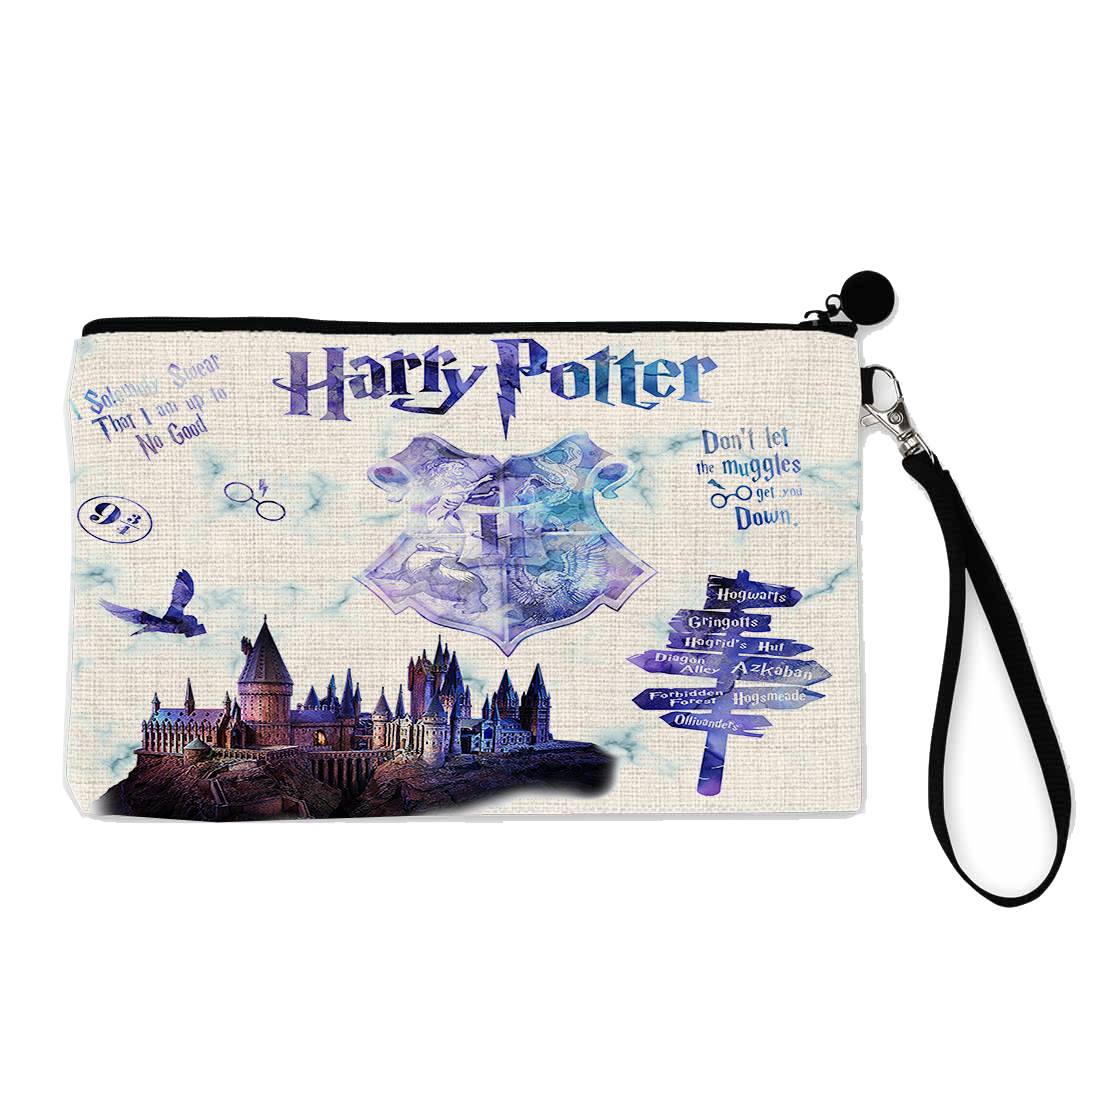 Harry Potter Wristlet